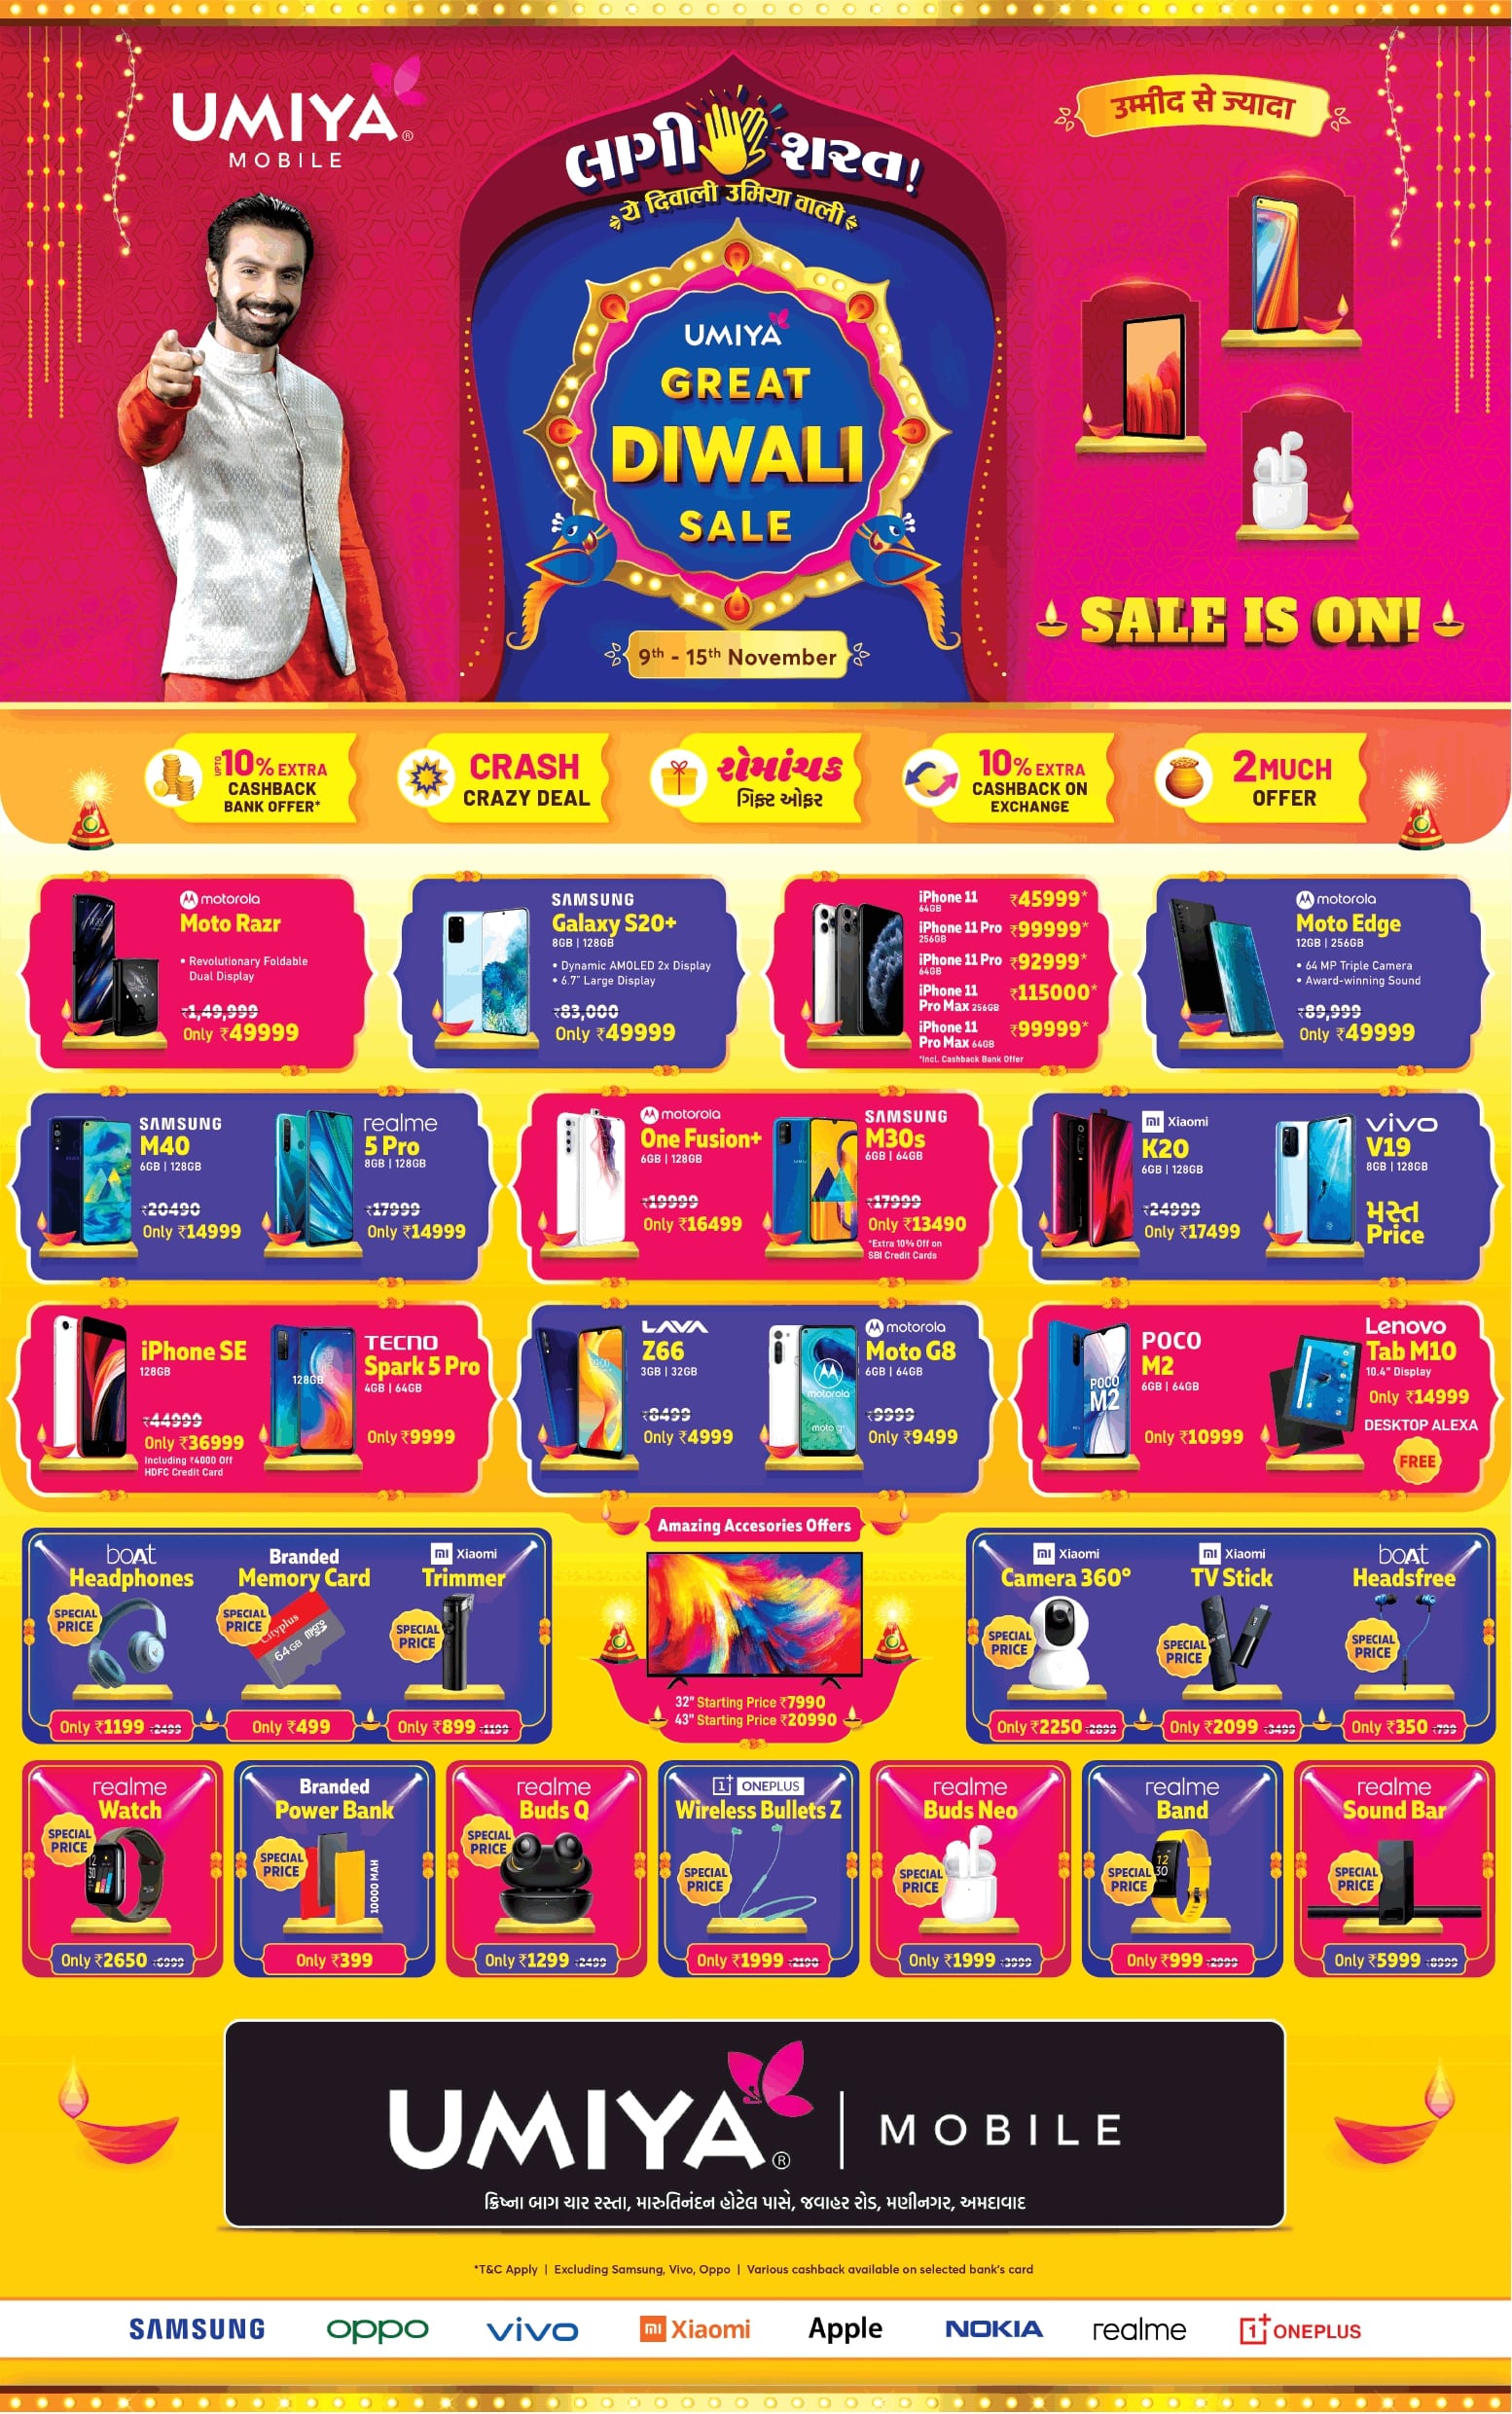 umiya-mobile-great-diwali-sale-ad-toi-ahmedabad-10-11-2020